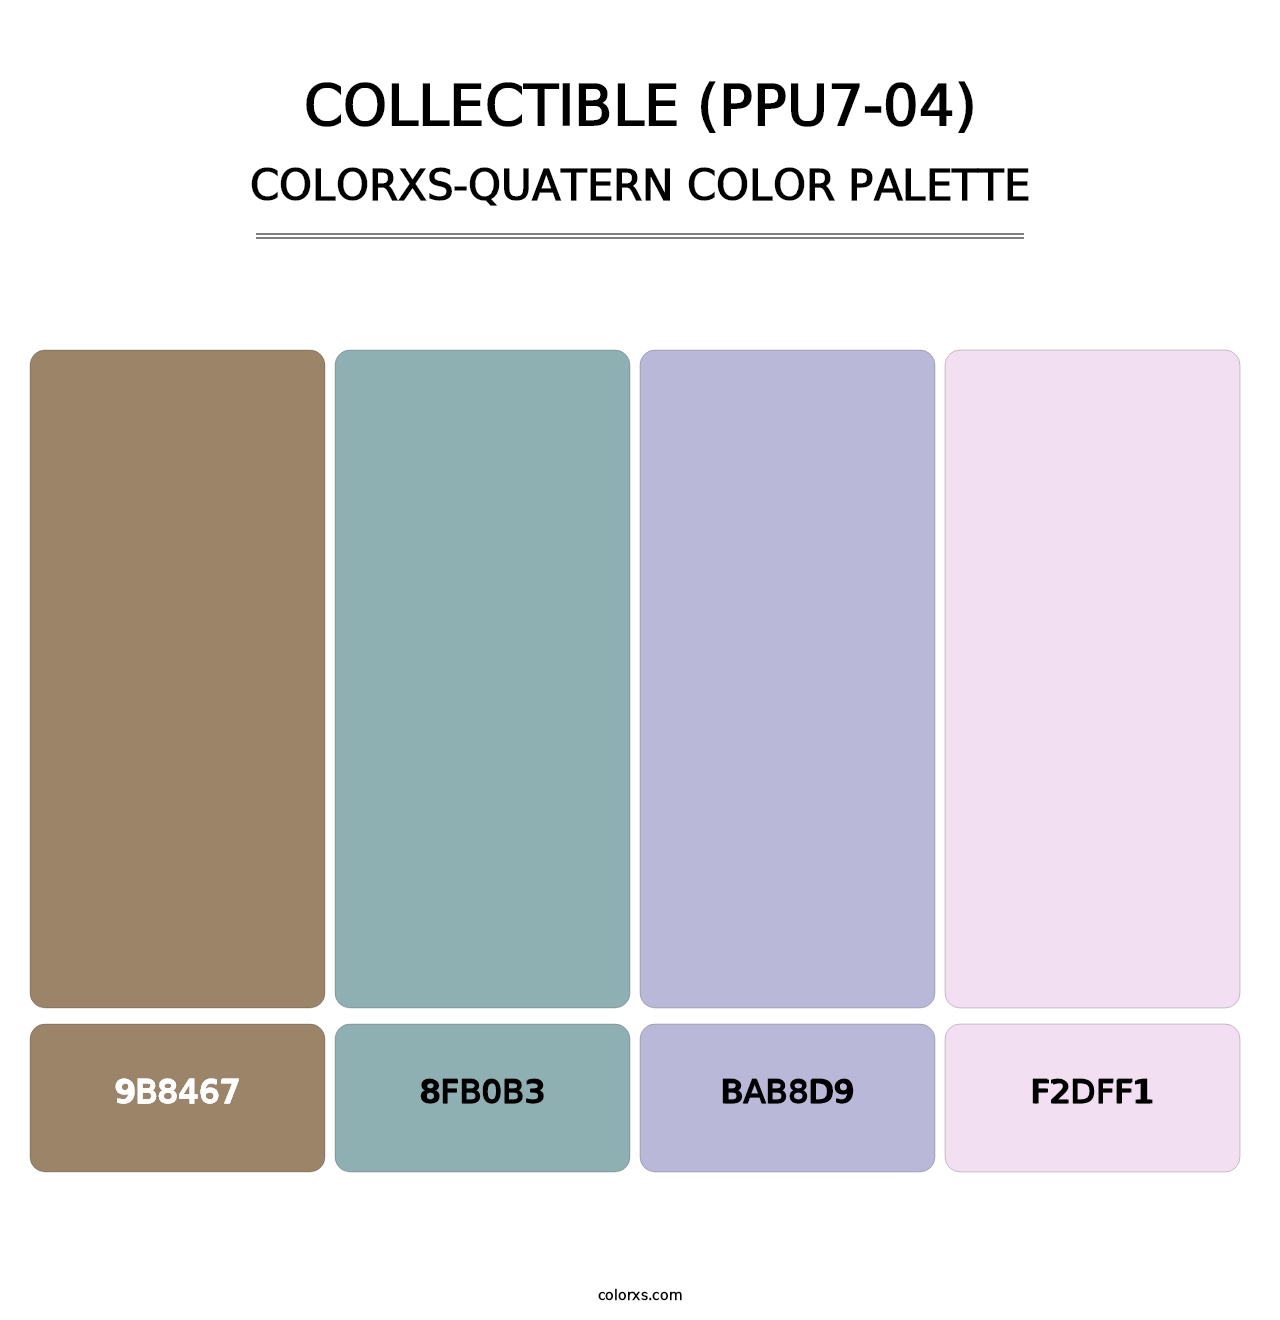 Collectible (PPU7-04) - Colorxs Quatern Palette